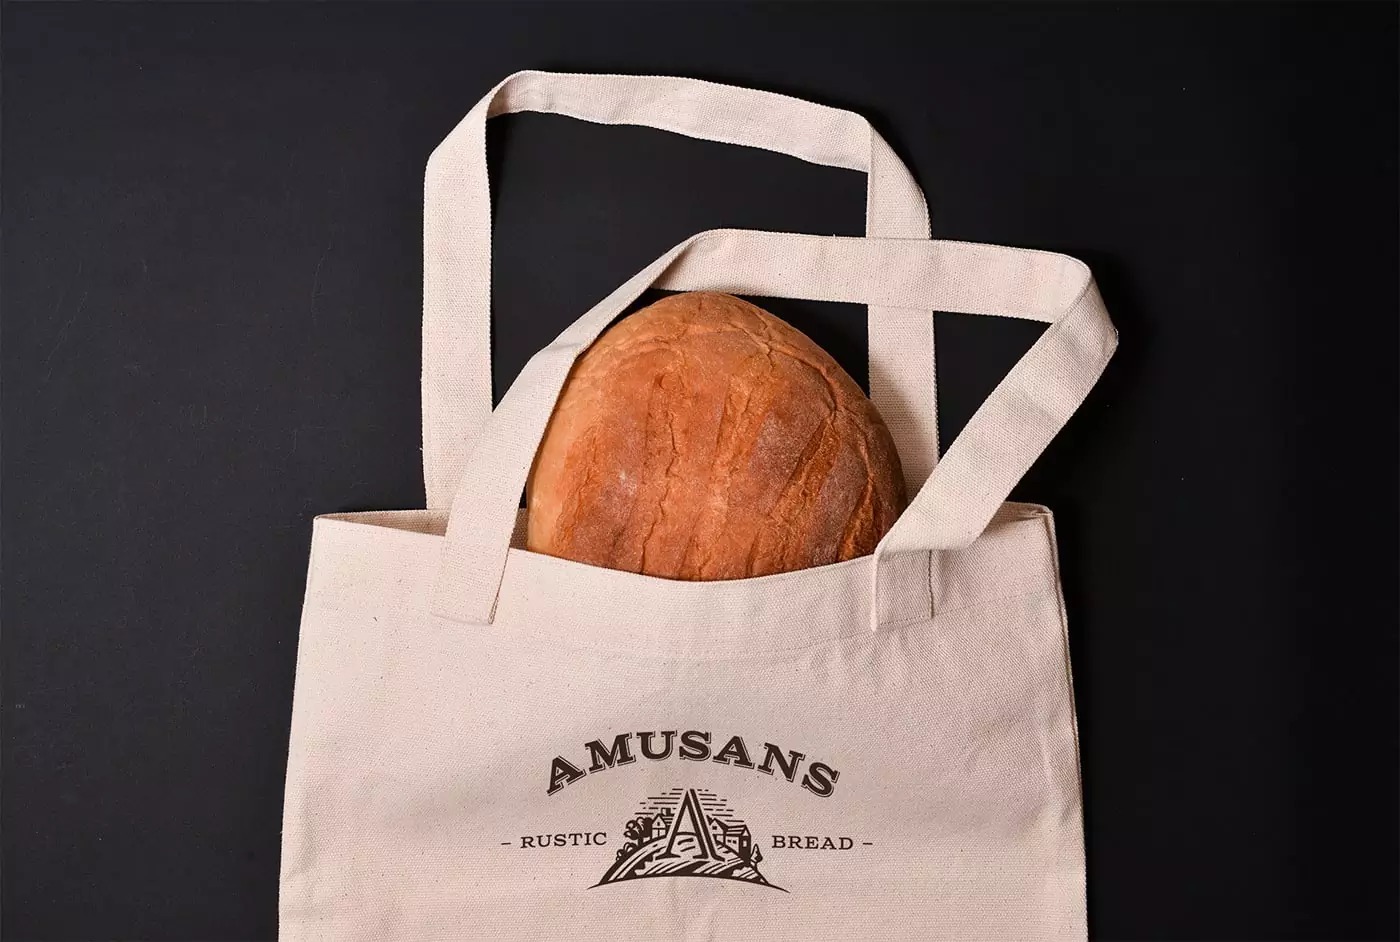 Amusans手工面包品牌形象设计